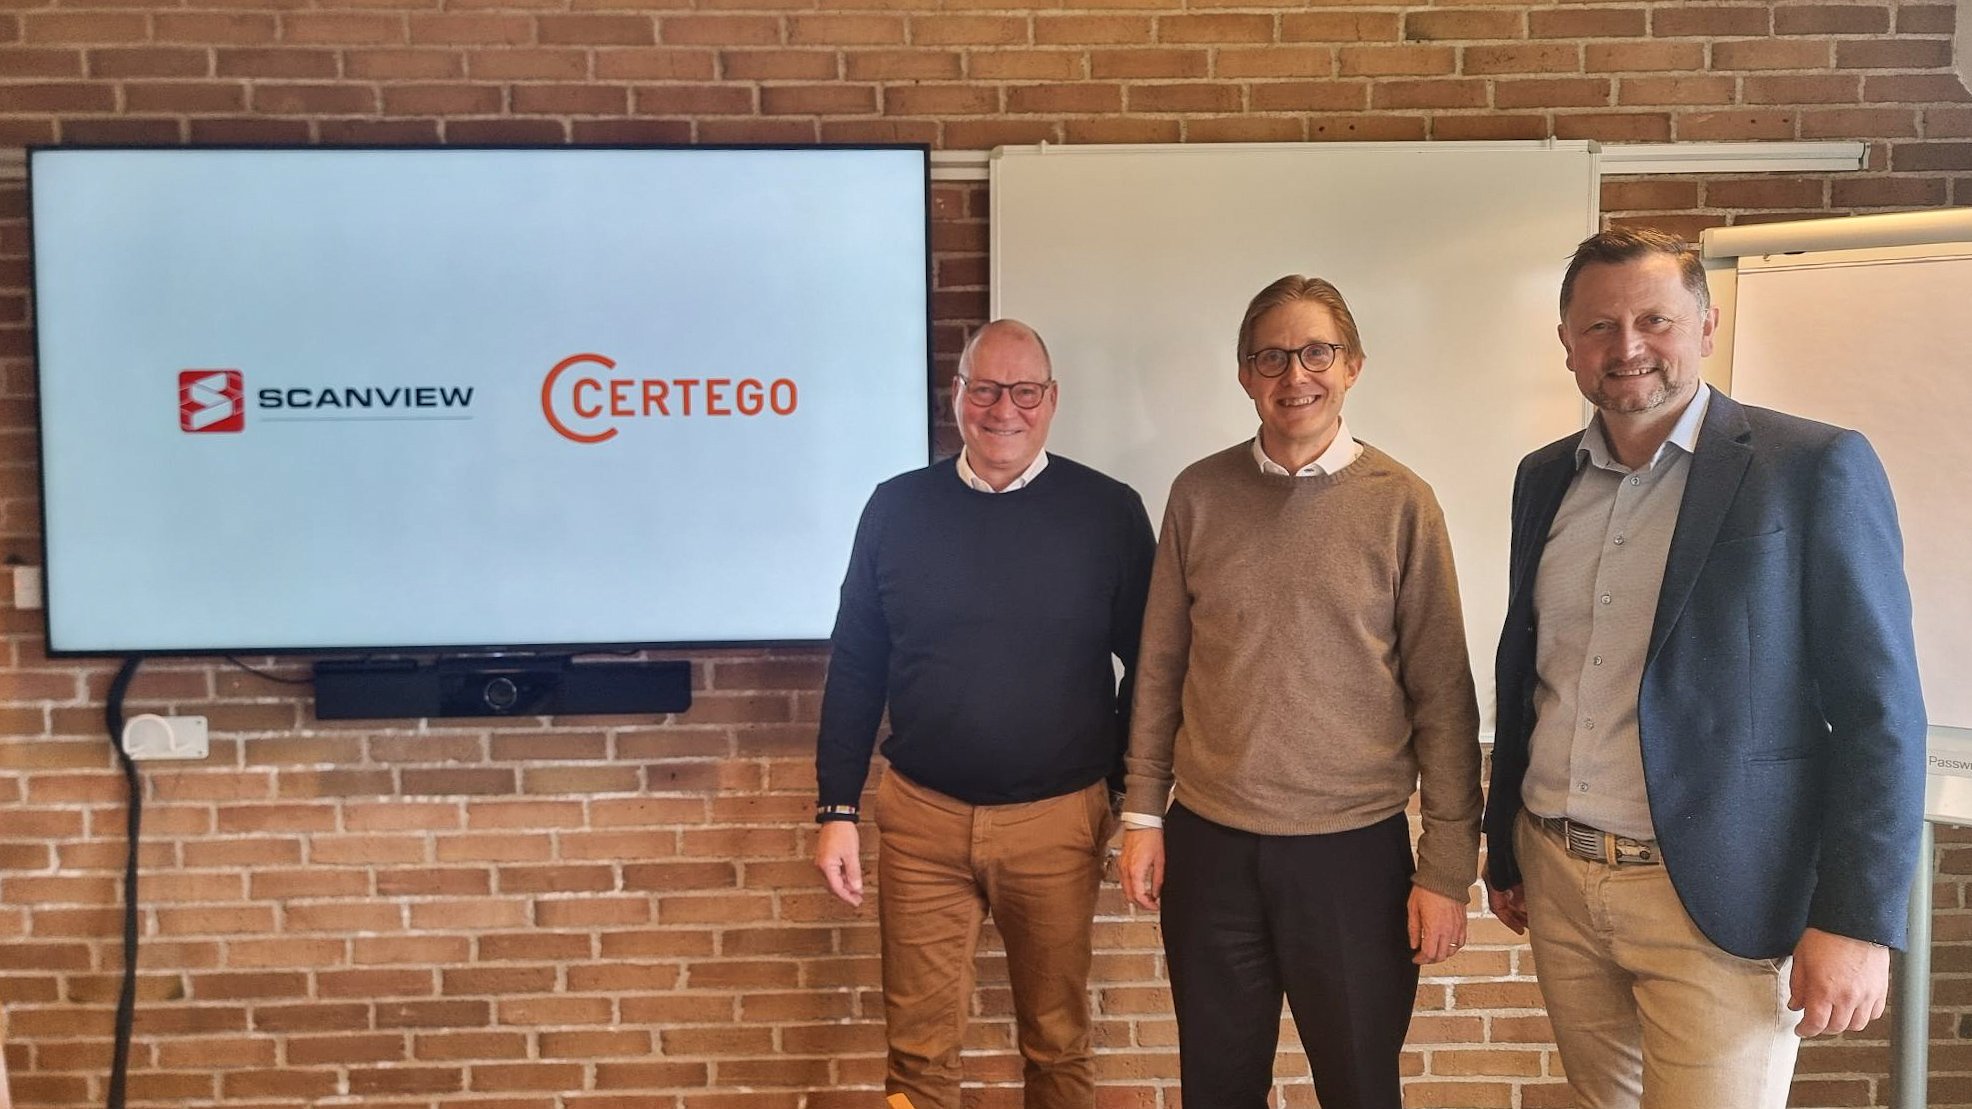 CERTEGO to acquire SCANVIEW in Denmark